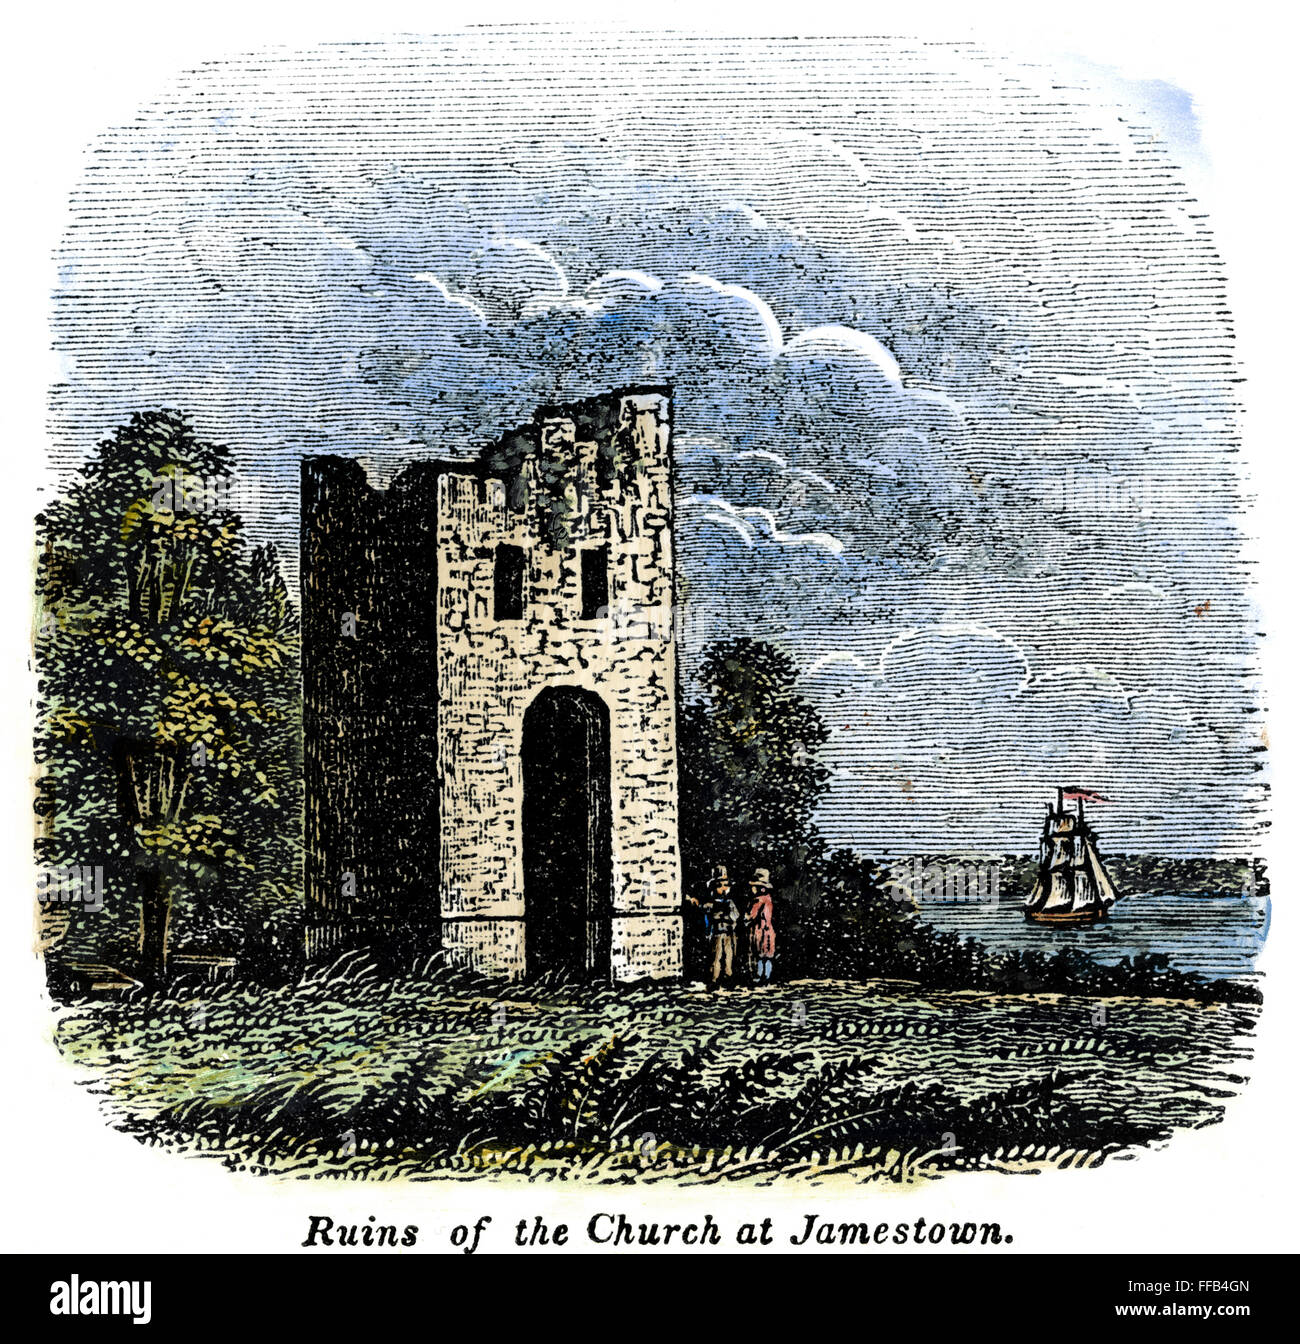 JAMESTOWN RUINEN. /nRuins der Kirche in Jamestown, Virginia. Farbe Gravur, c1845. Stockfoto